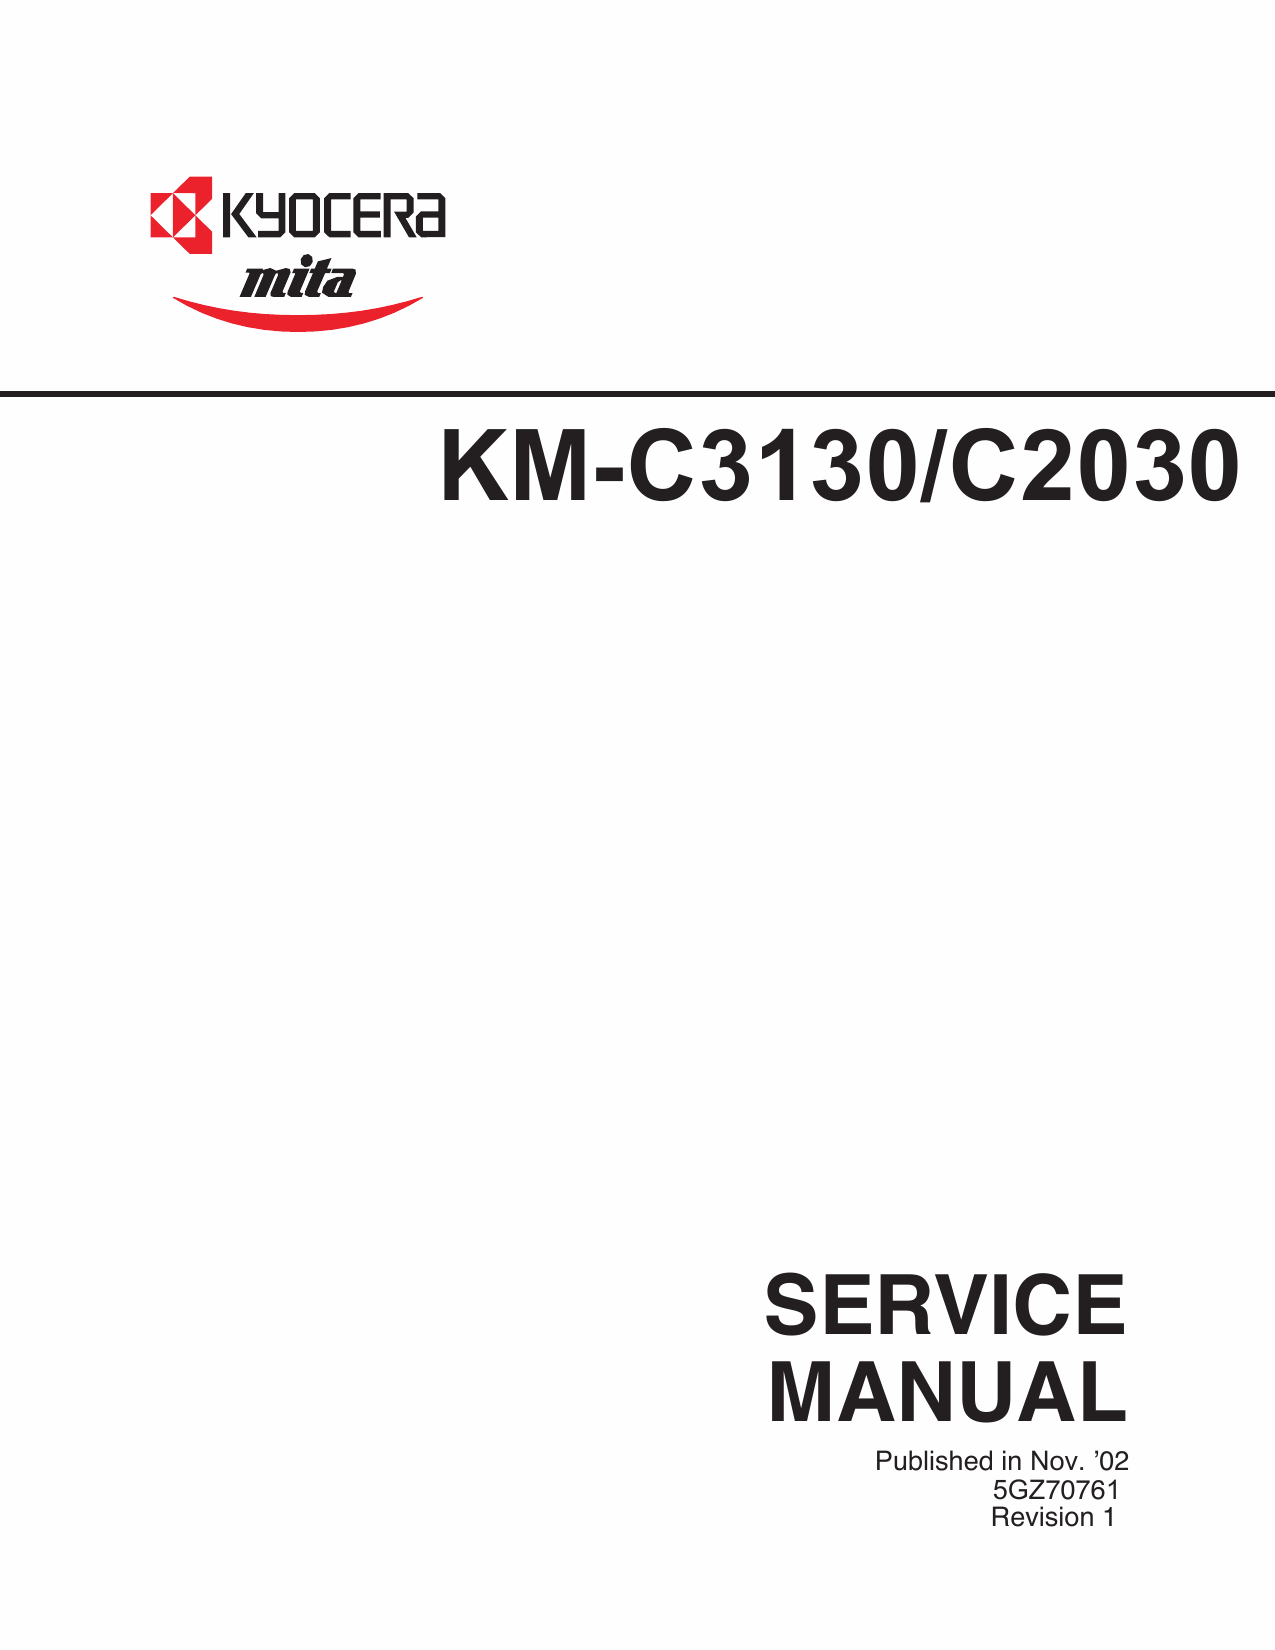 KYOCERA ColorCopier KM-C2030 C3130 Parts and Service Manual-1